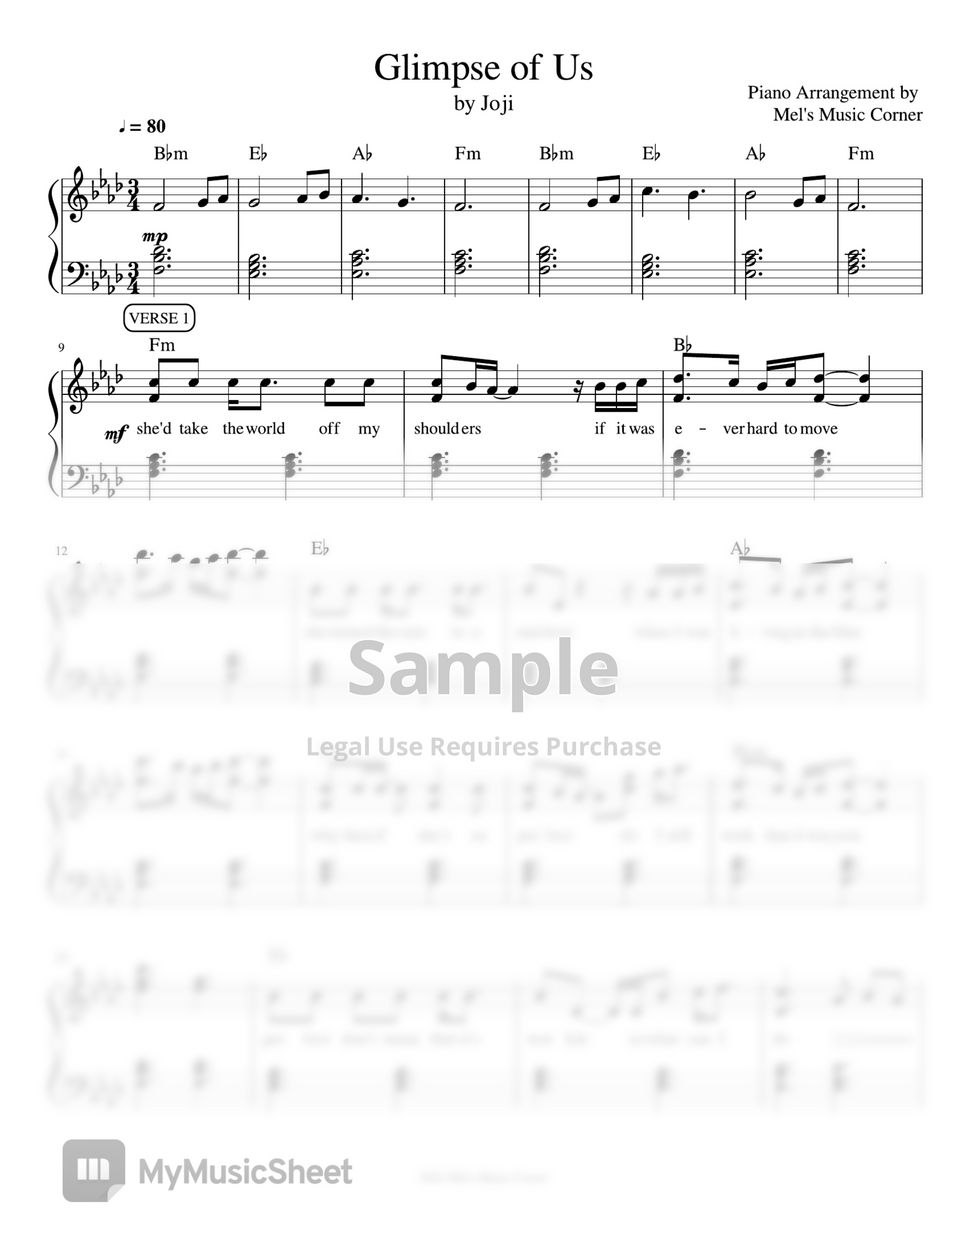 Joji - Glimpse of Us (piano sheet music) by Mel's Music Corner